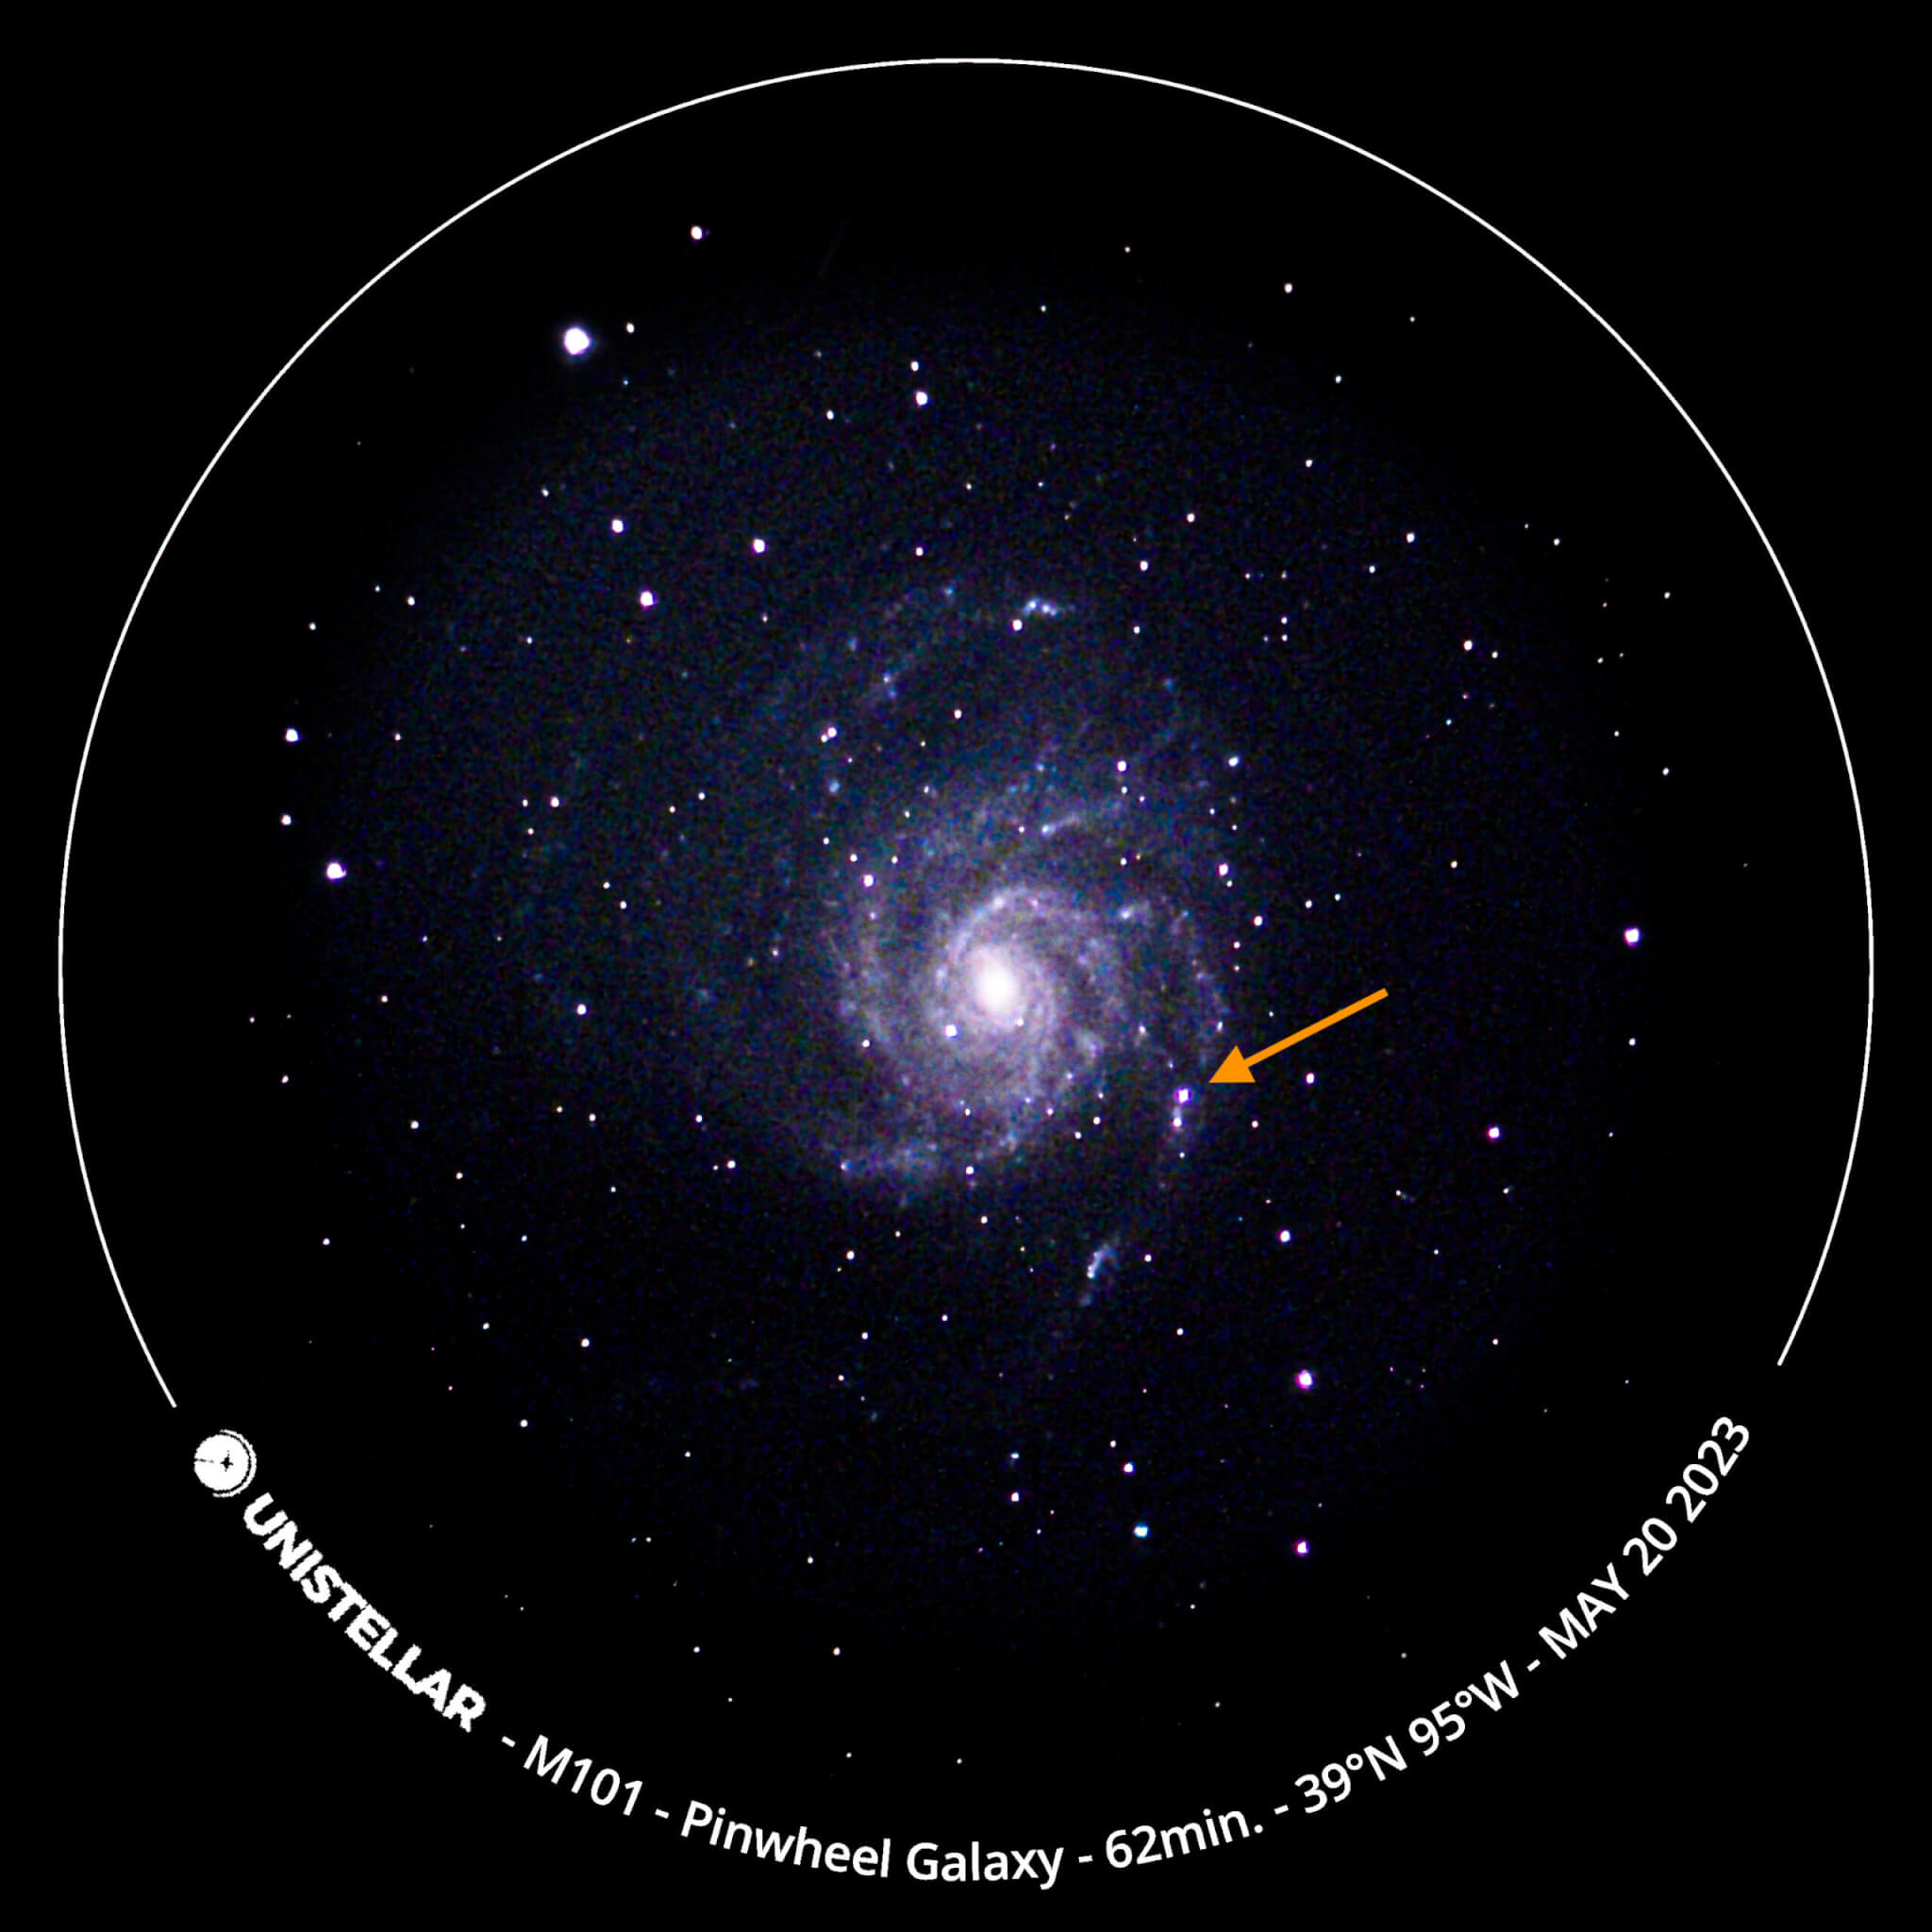 Supernova in the Pinwheel Galaxy hq pic